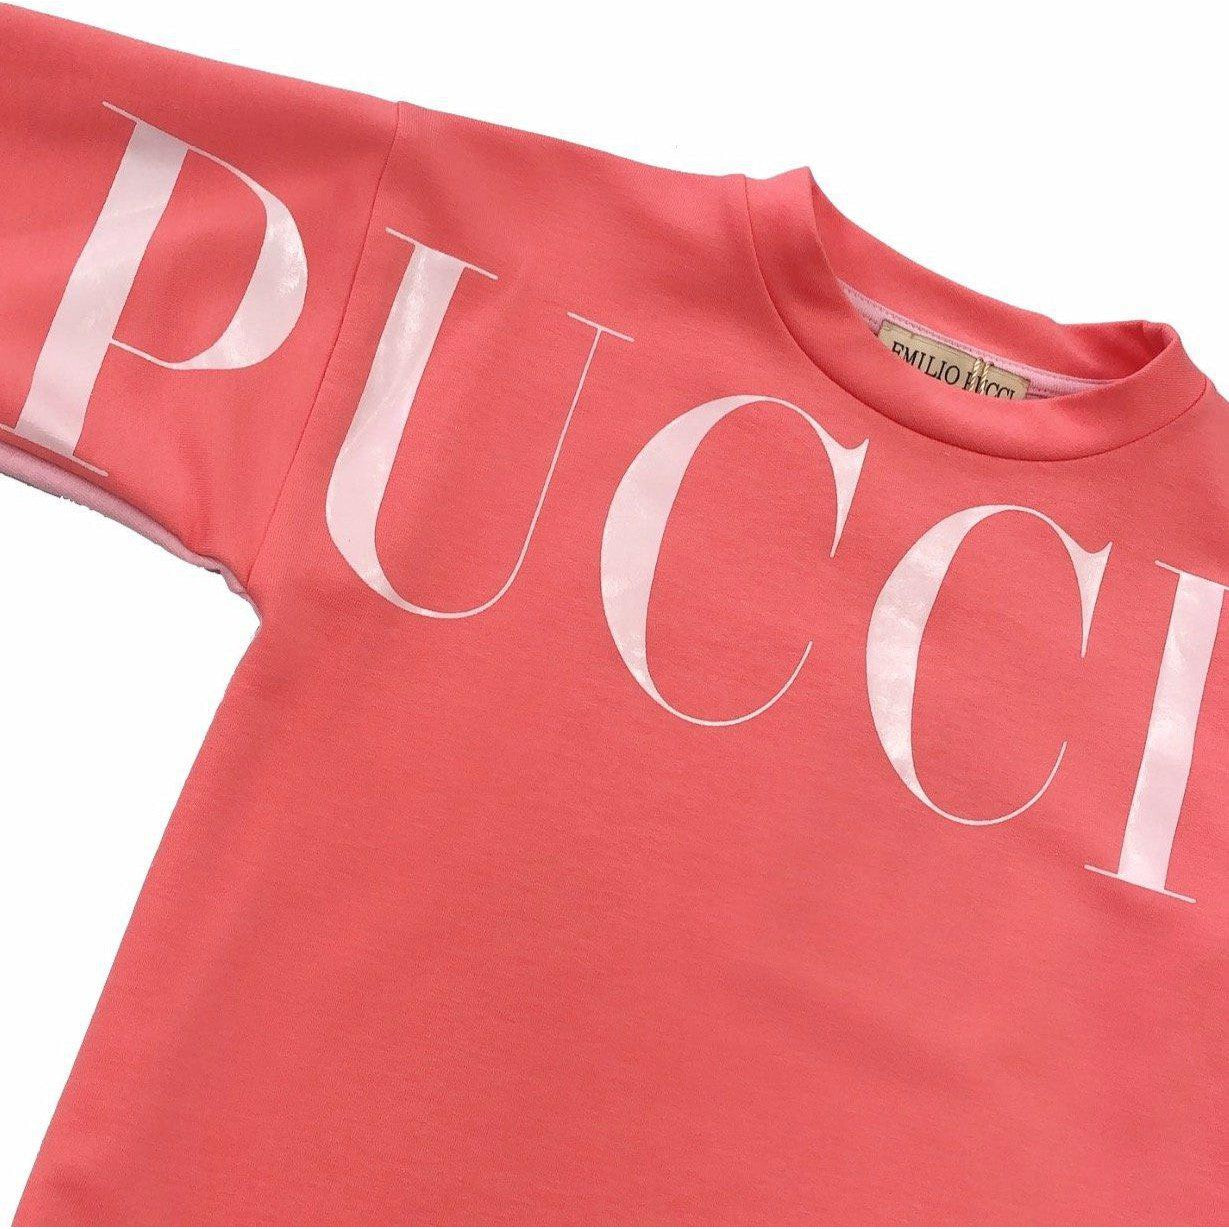 Emilio Pucci Girls Pink Logo Sweatshirt Dress